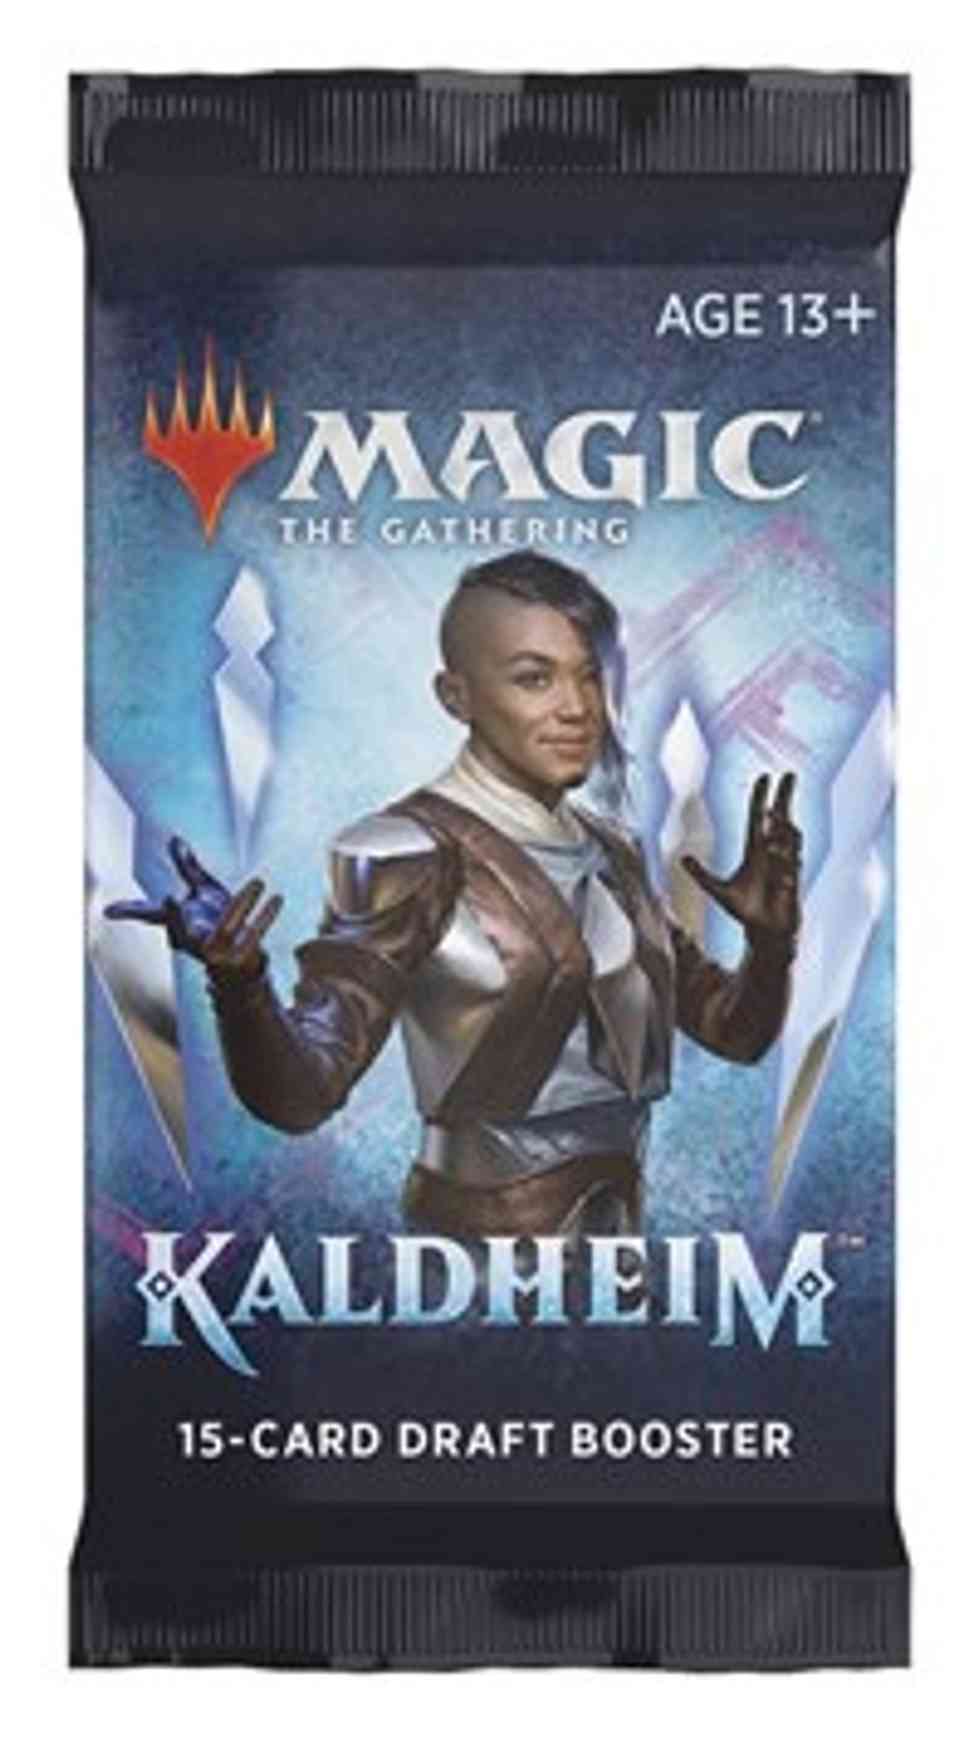 Kaldheim - Draft Booster Pack magic card front